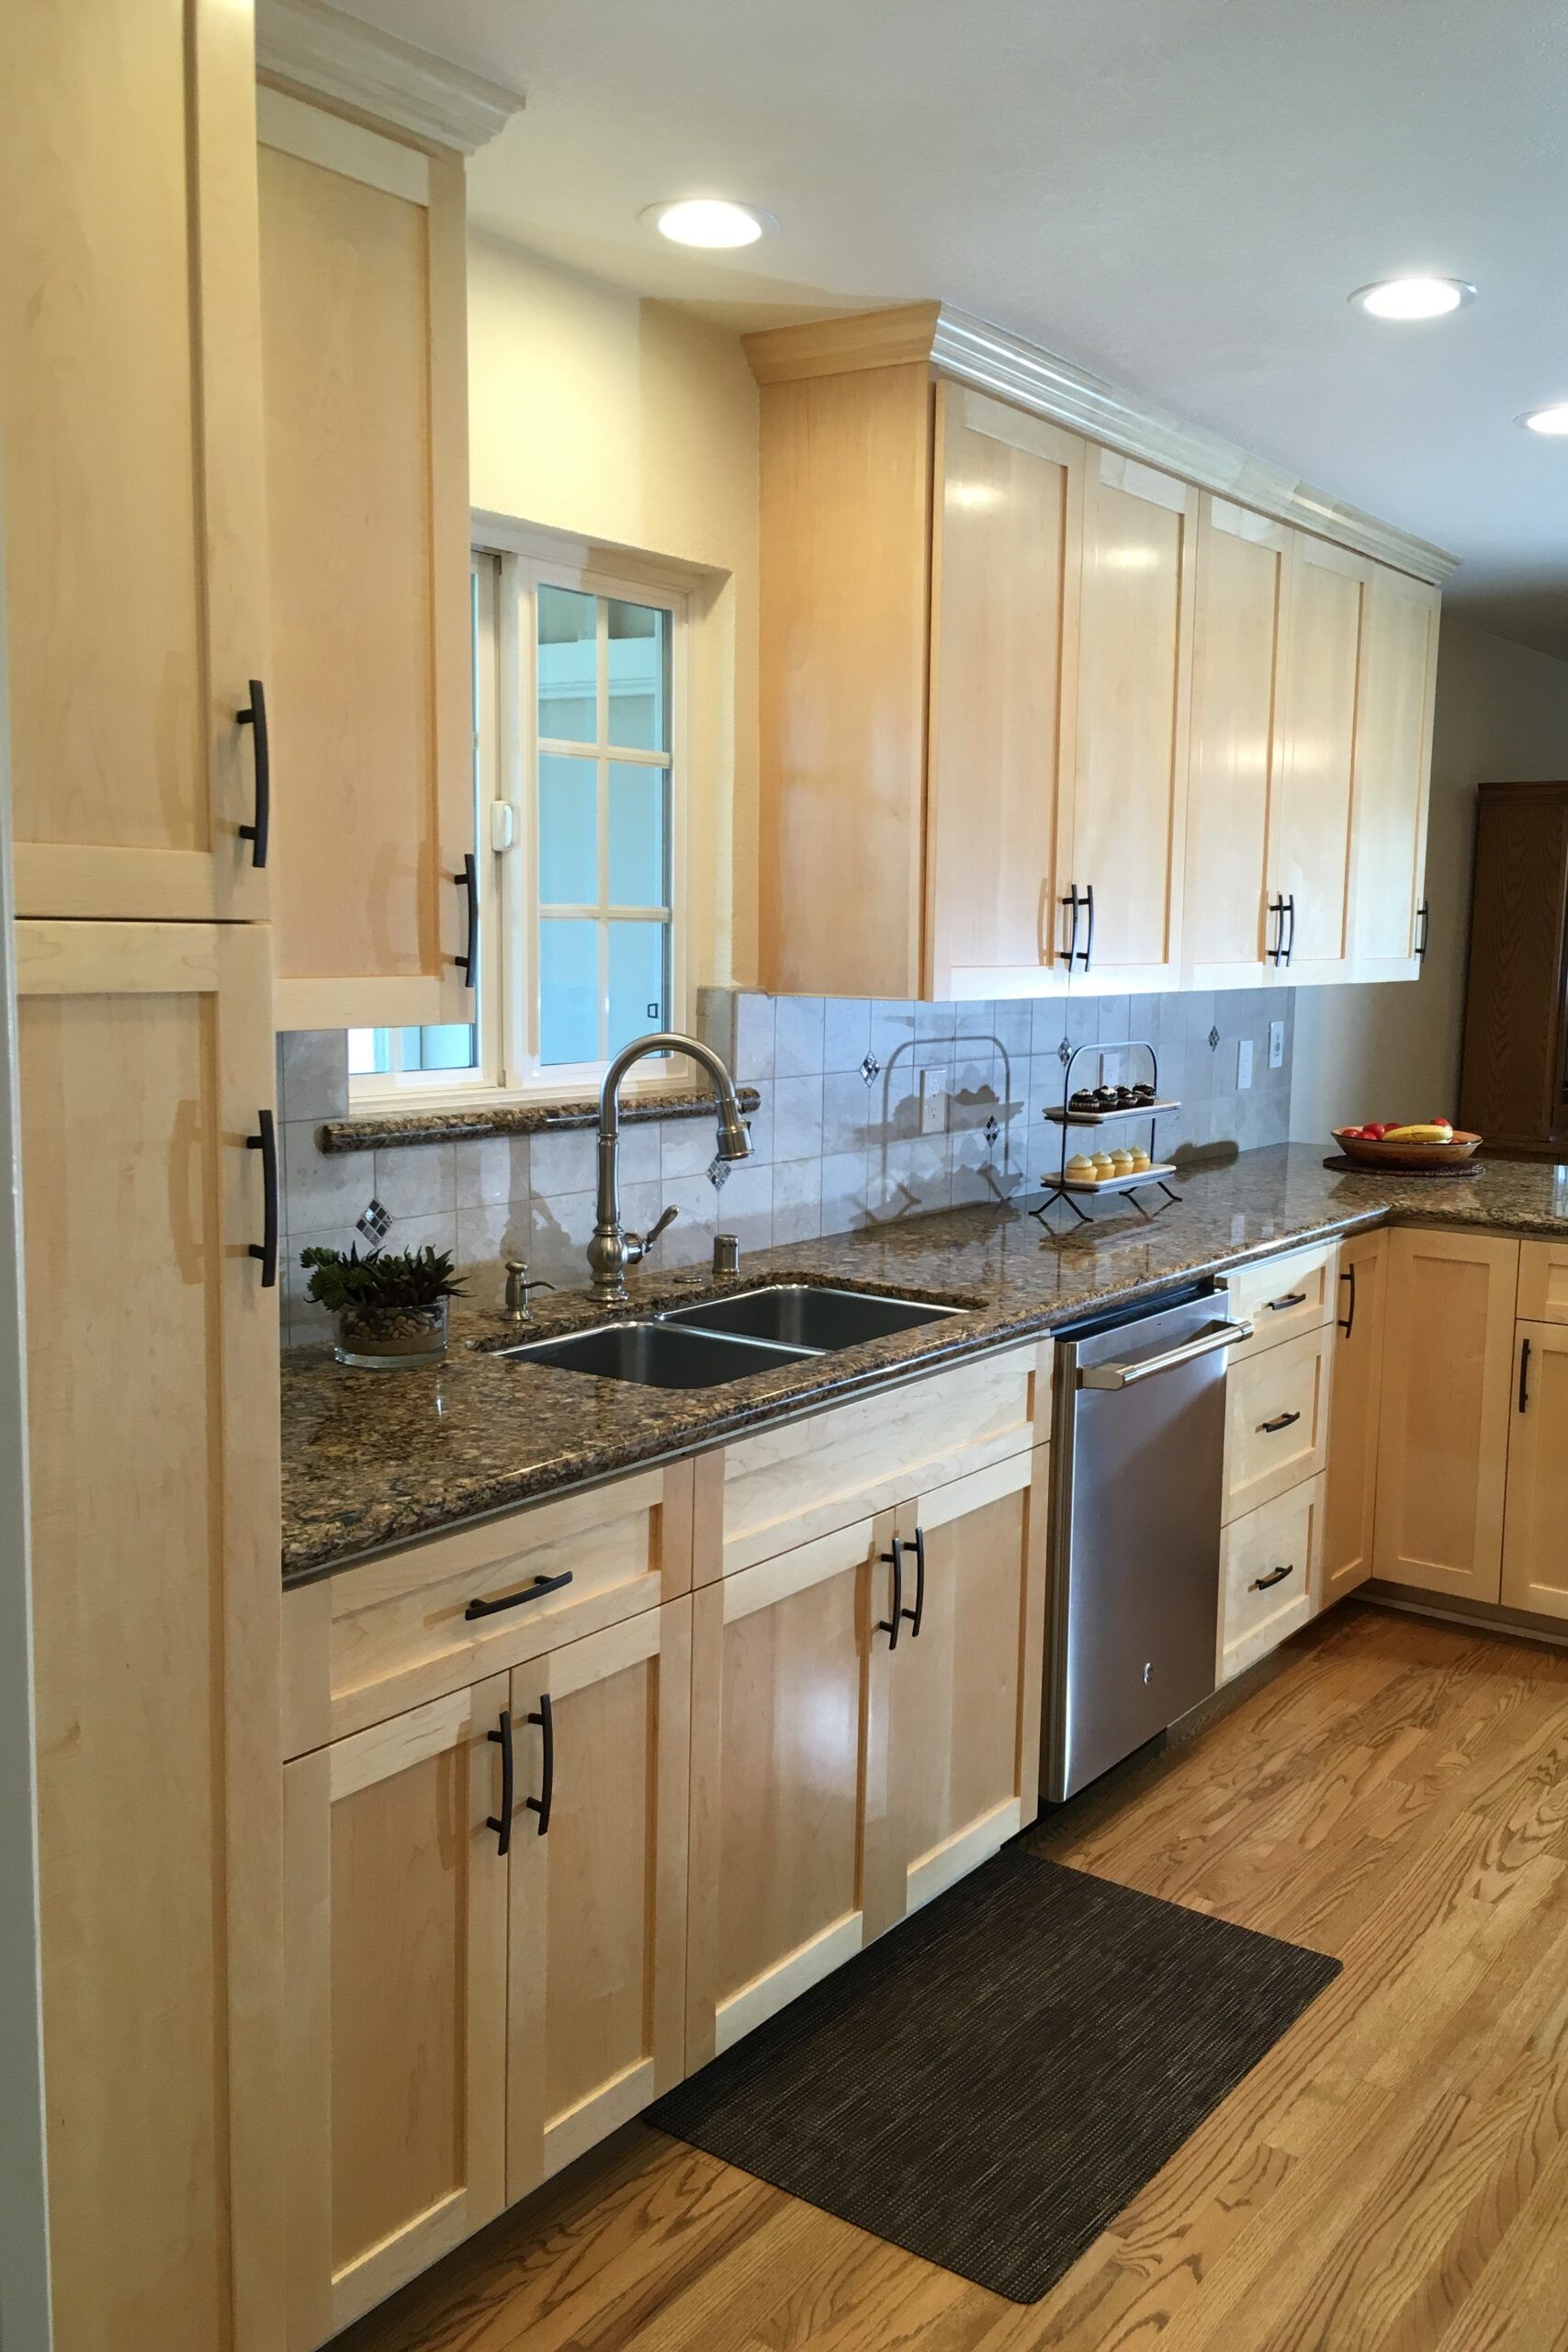 Natural maple cabinets, tile backsplash, and oak floors complete this light San Jose kitchen.